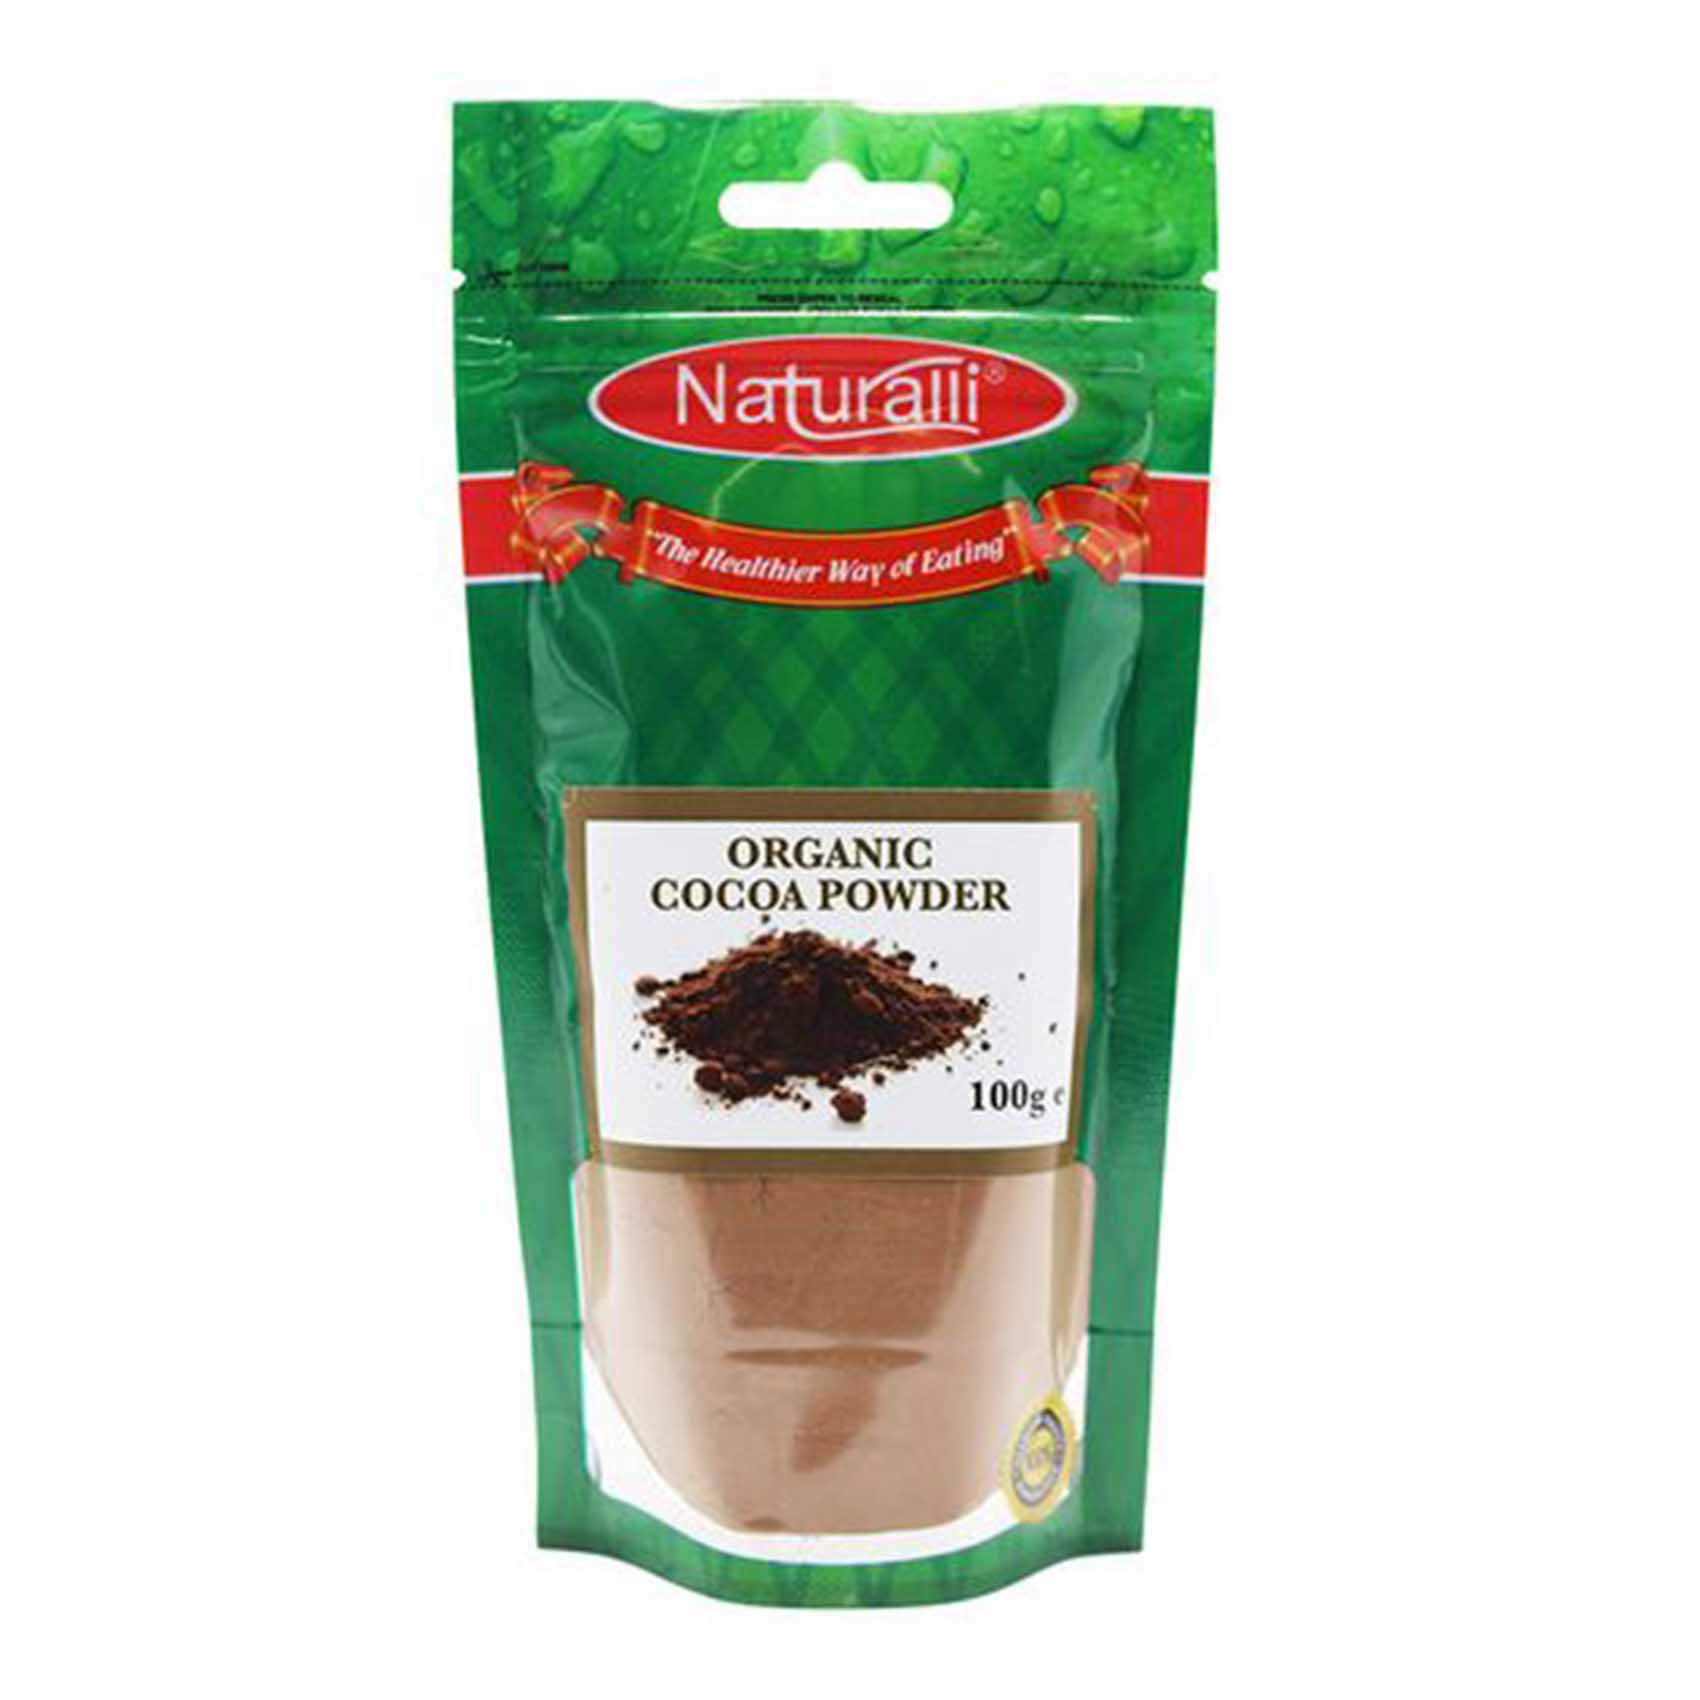 Naturalli Organic Cocoa Powder 100g